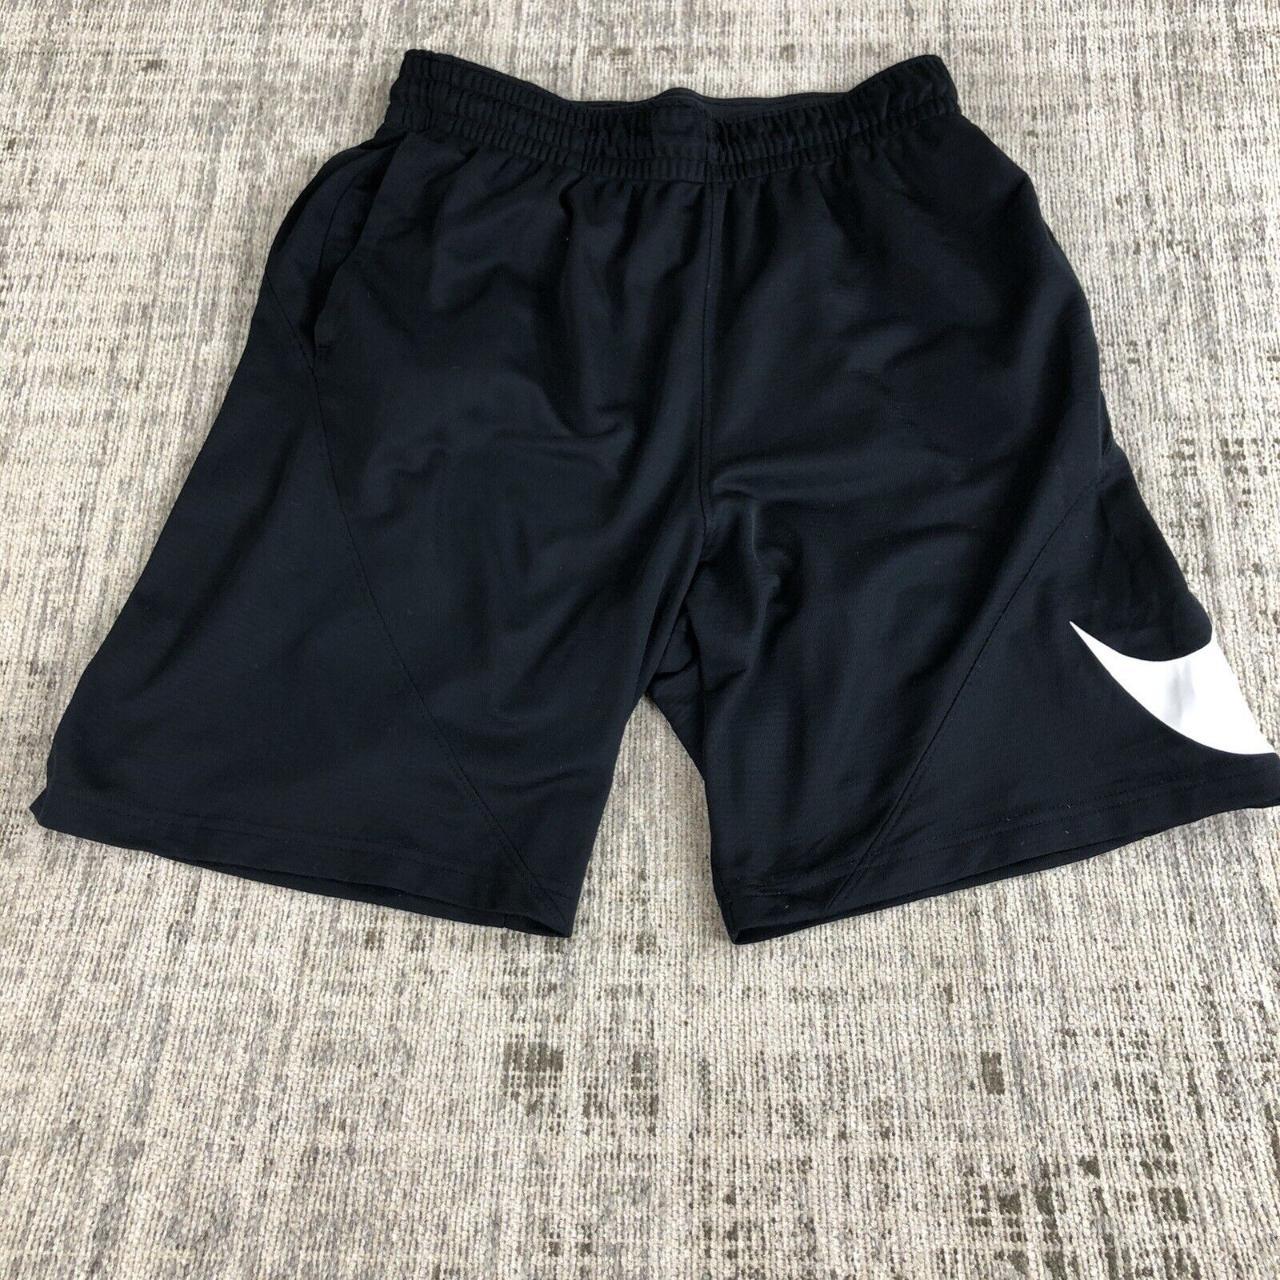 Nike Basketball Shorts Mens large Running Trunks... - Depop